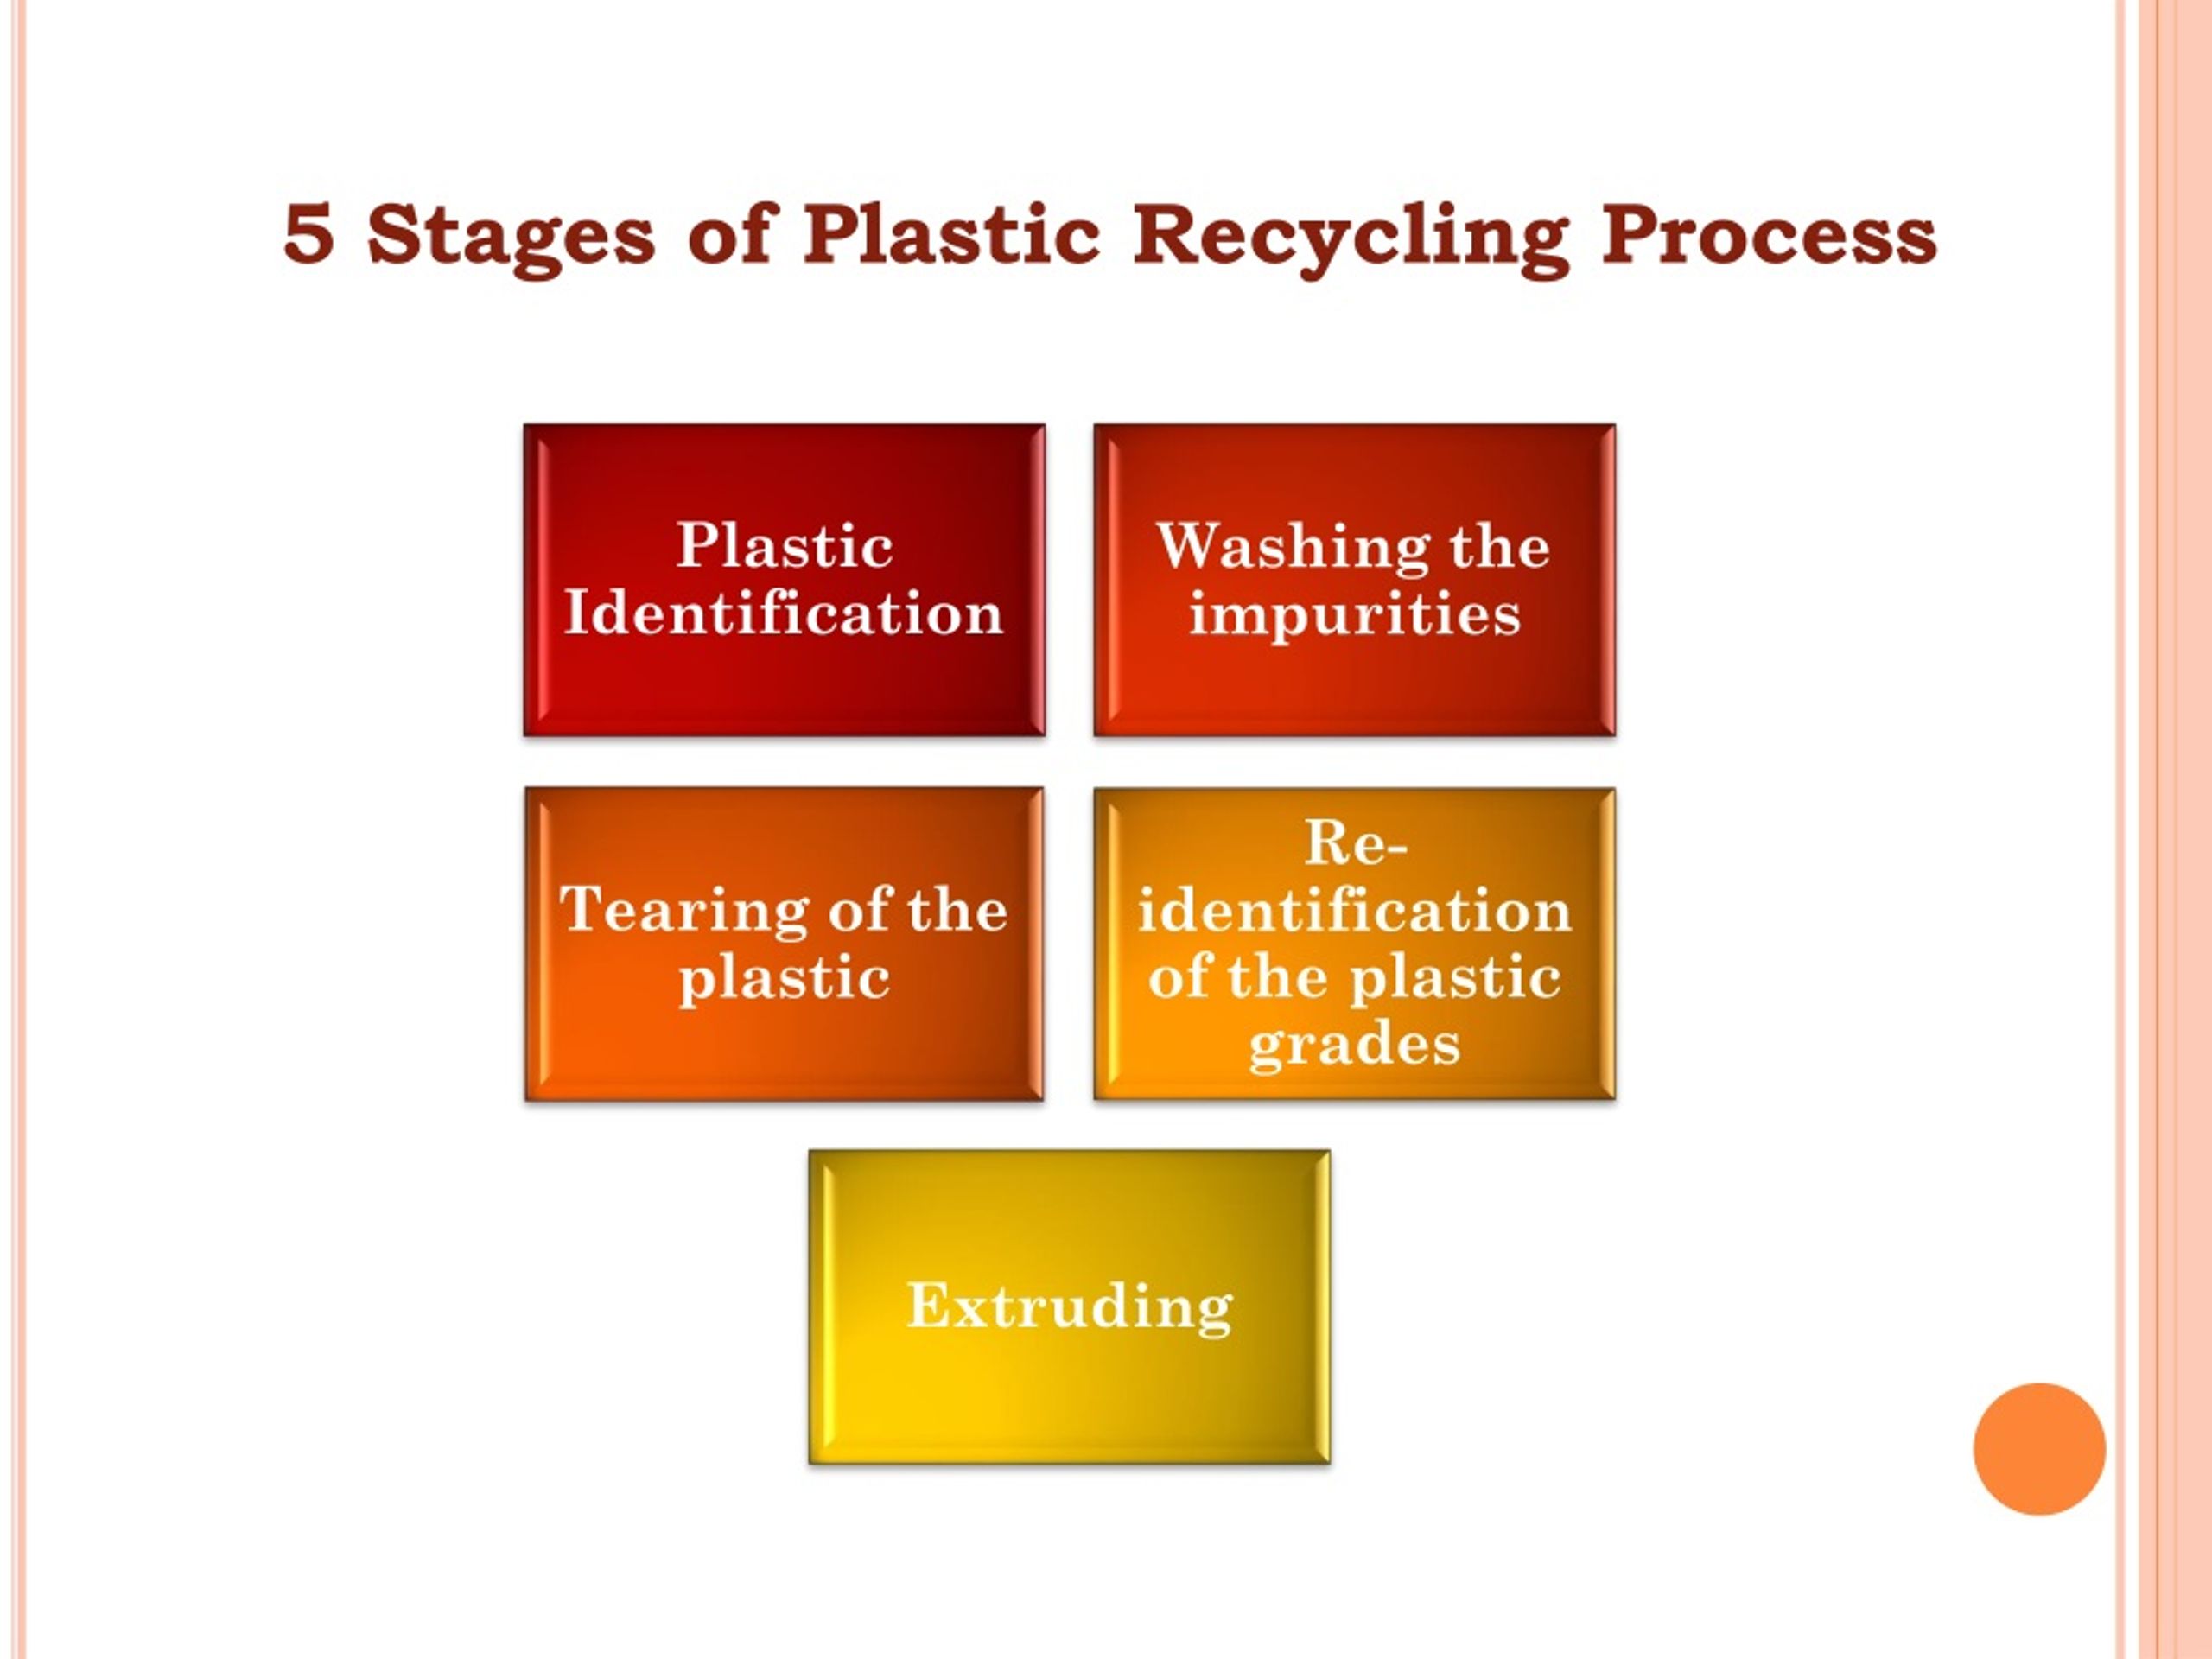 presentation on recycling process